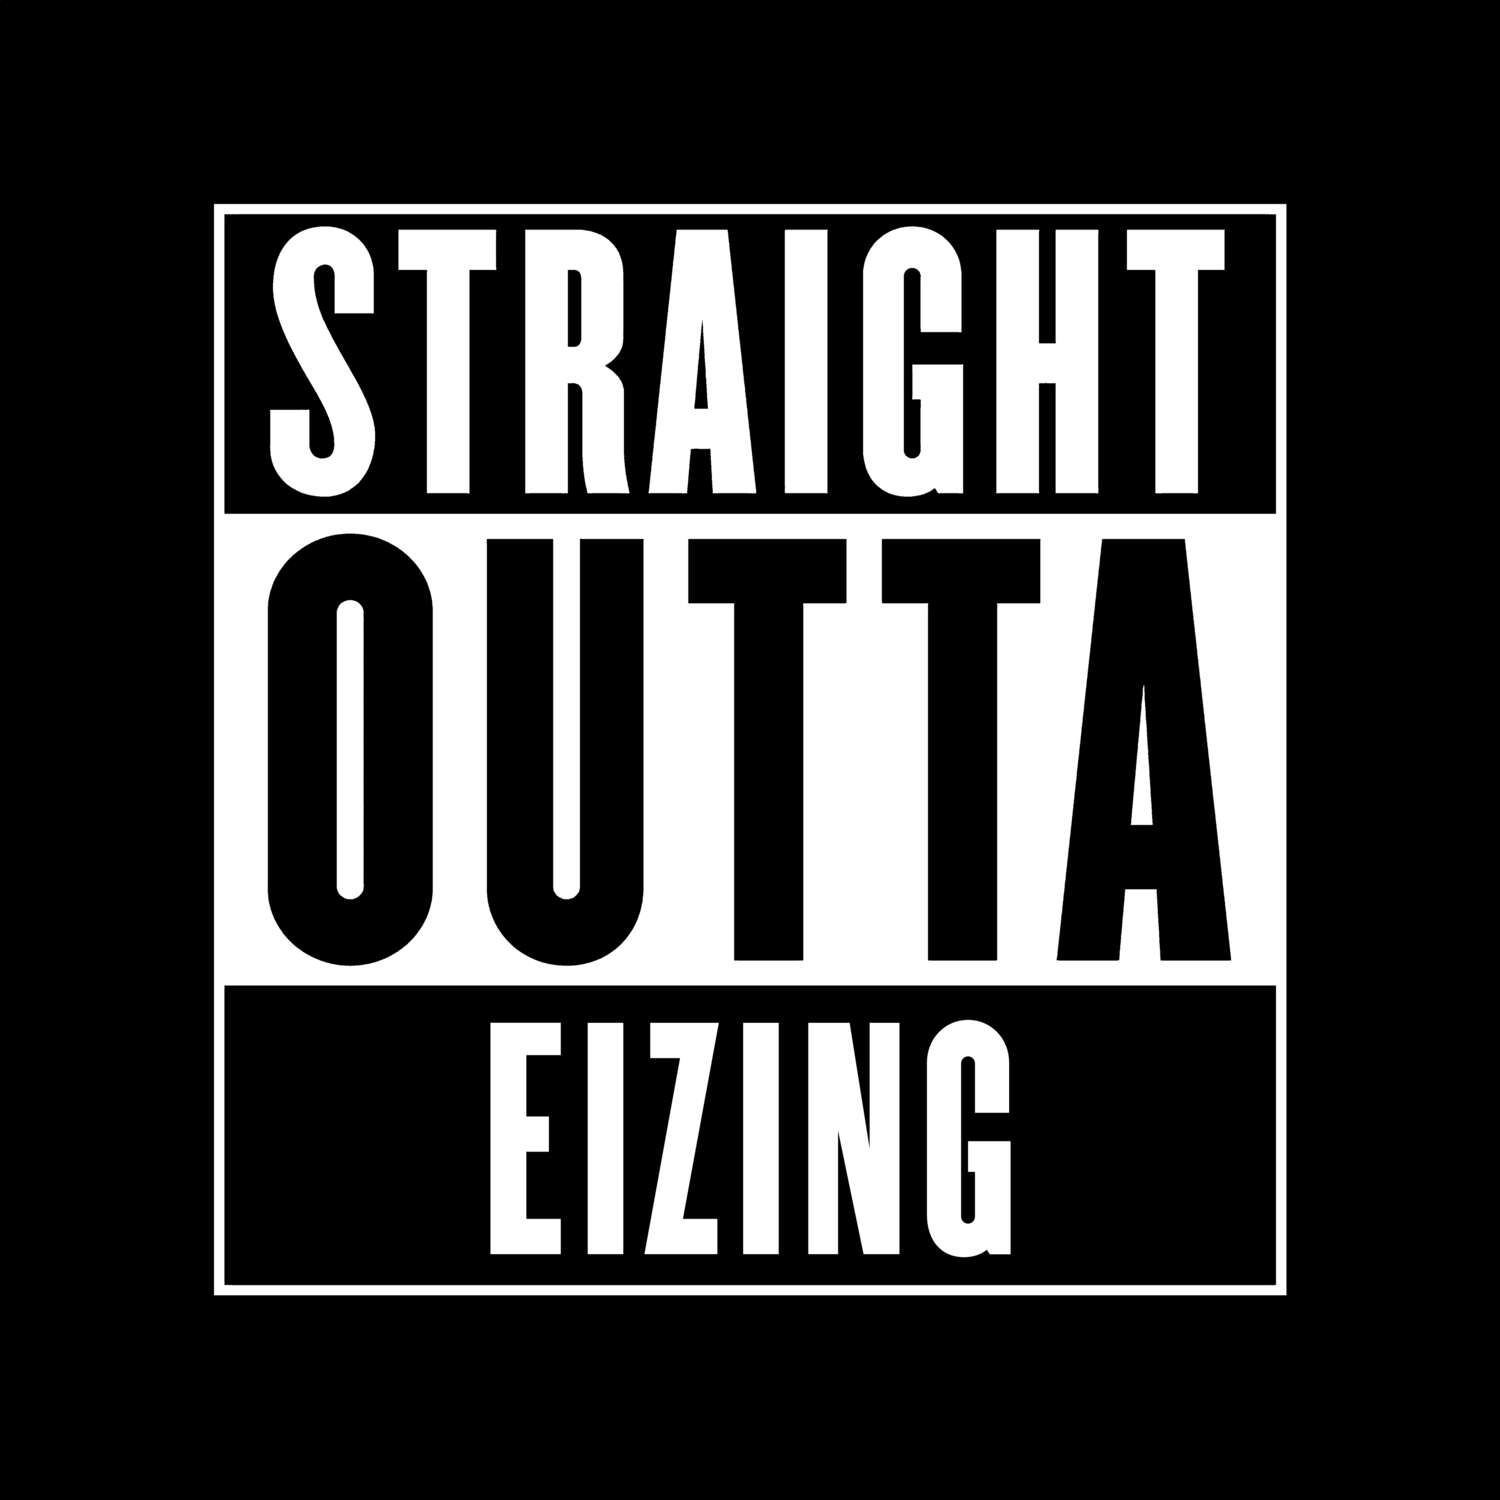 Eizing T-Shirt »Straight Outta«